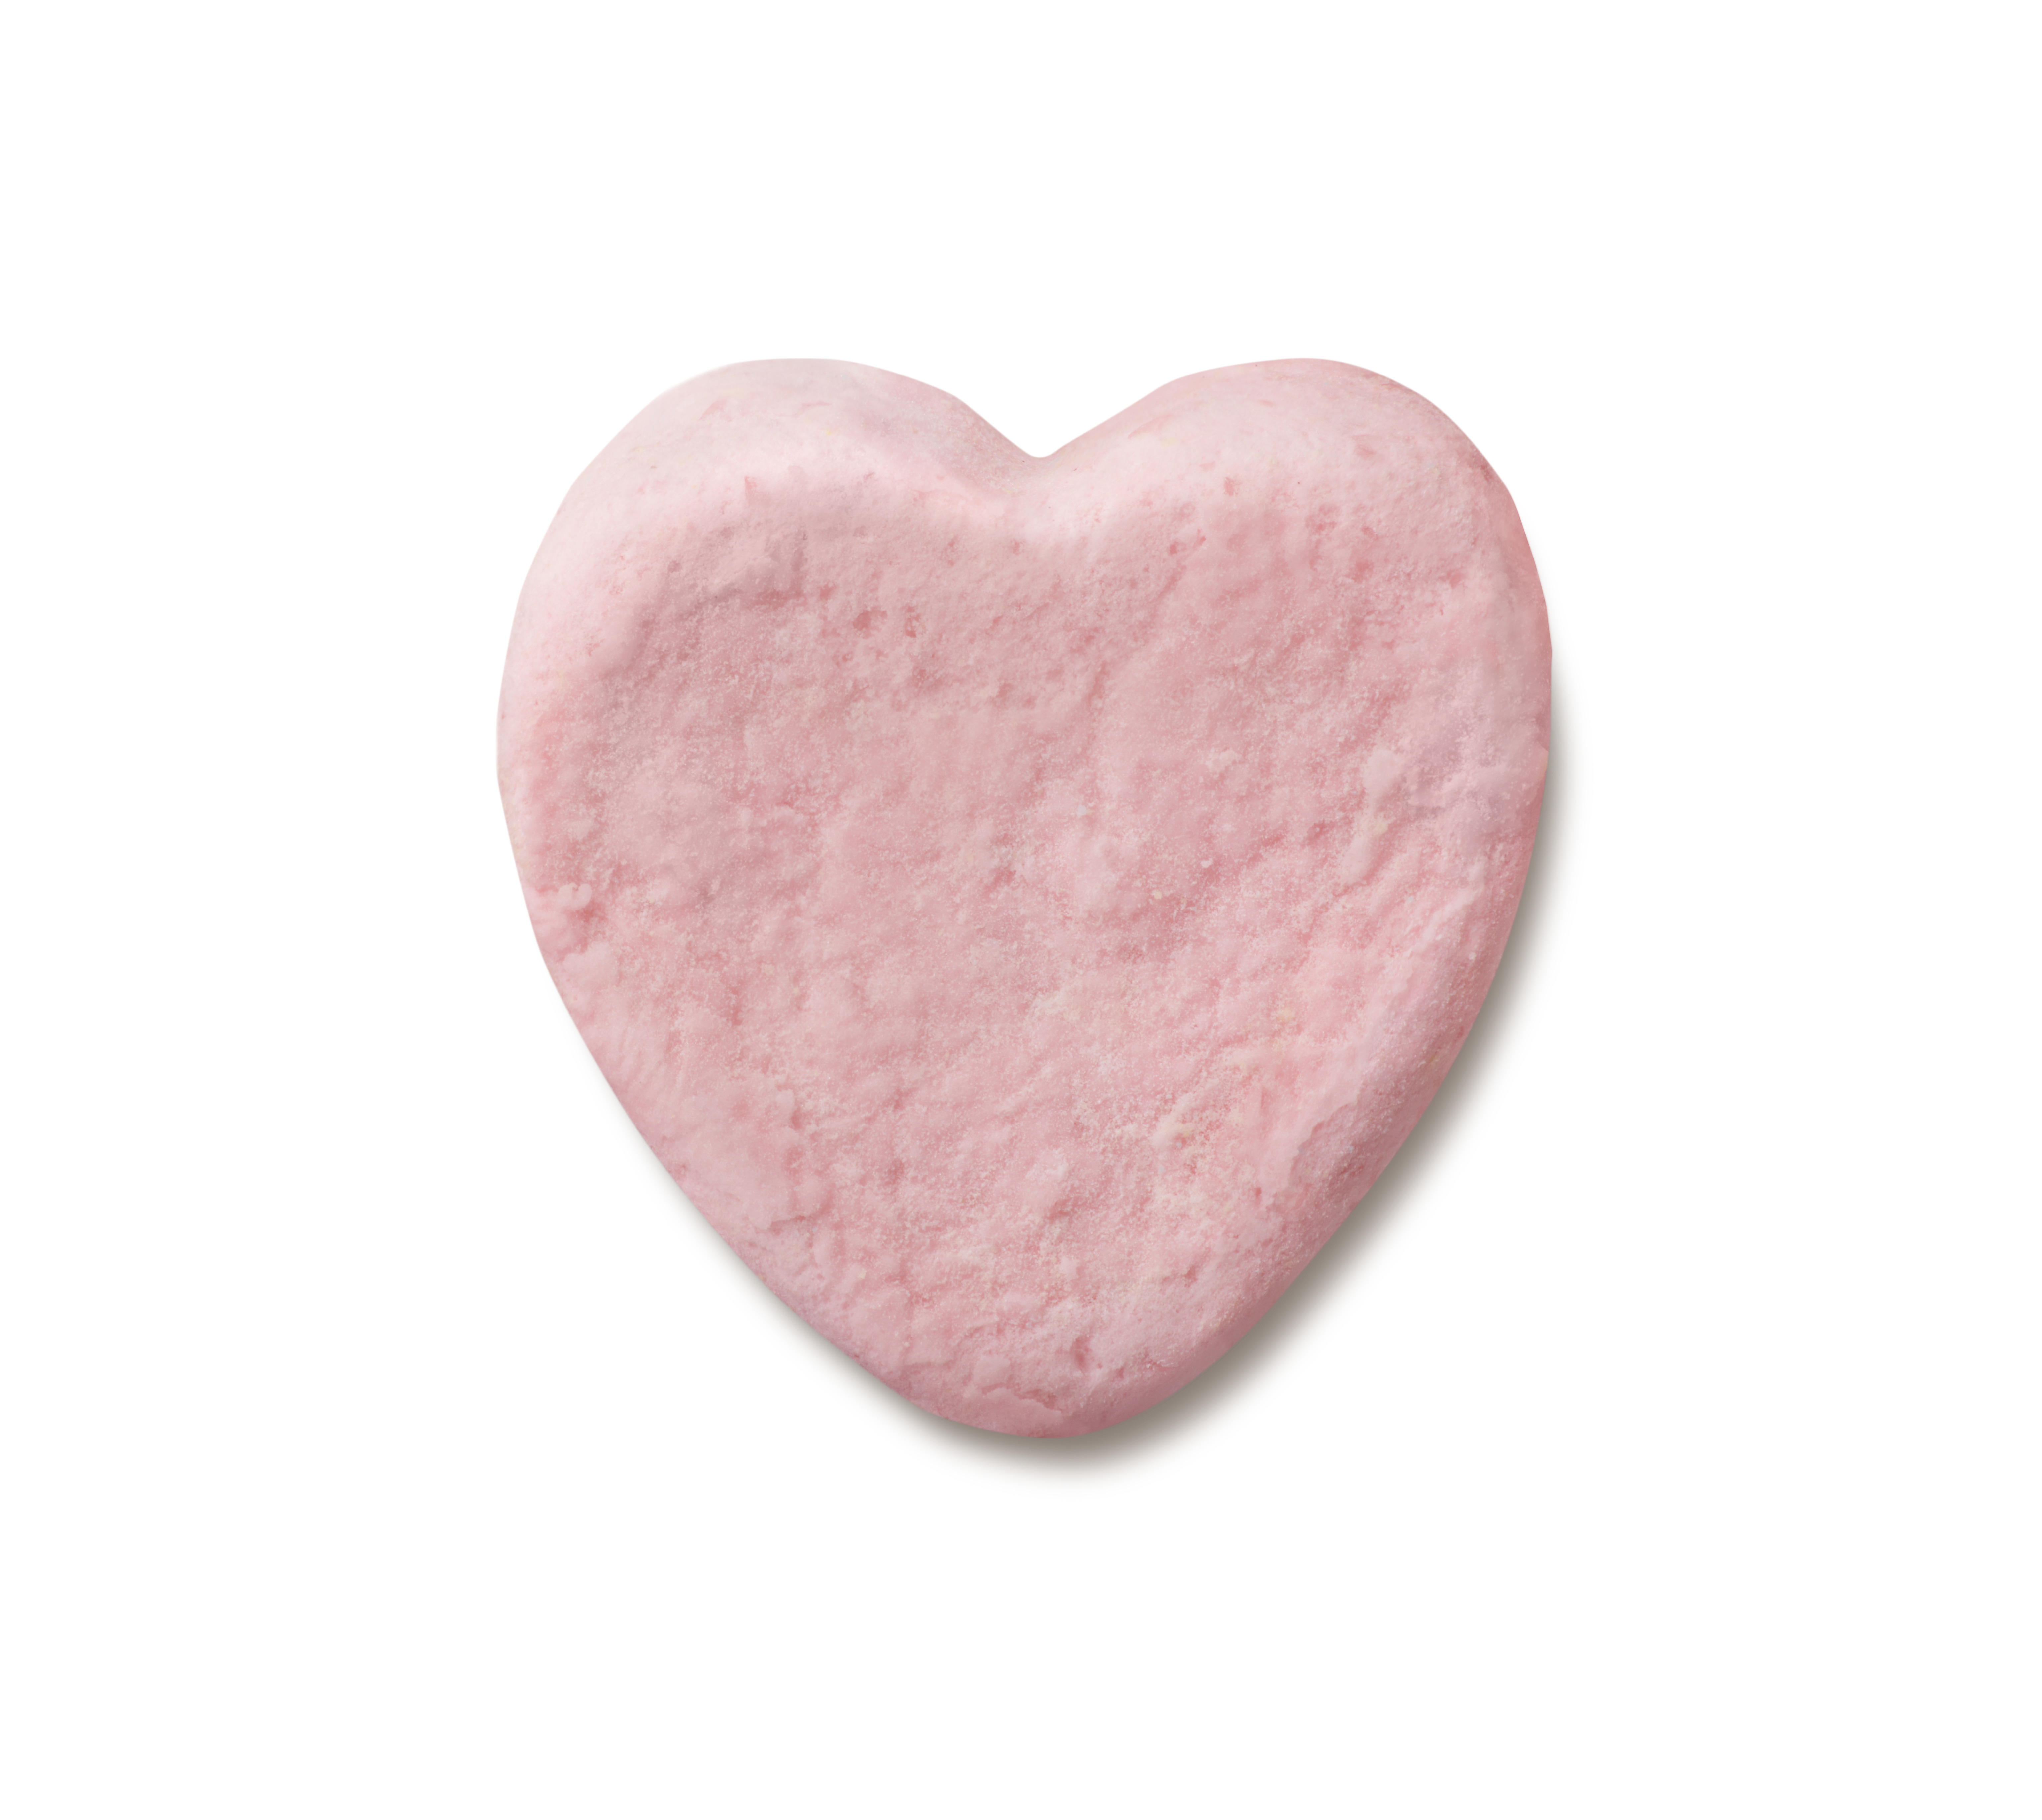 Lucky Charms heart marshmallow